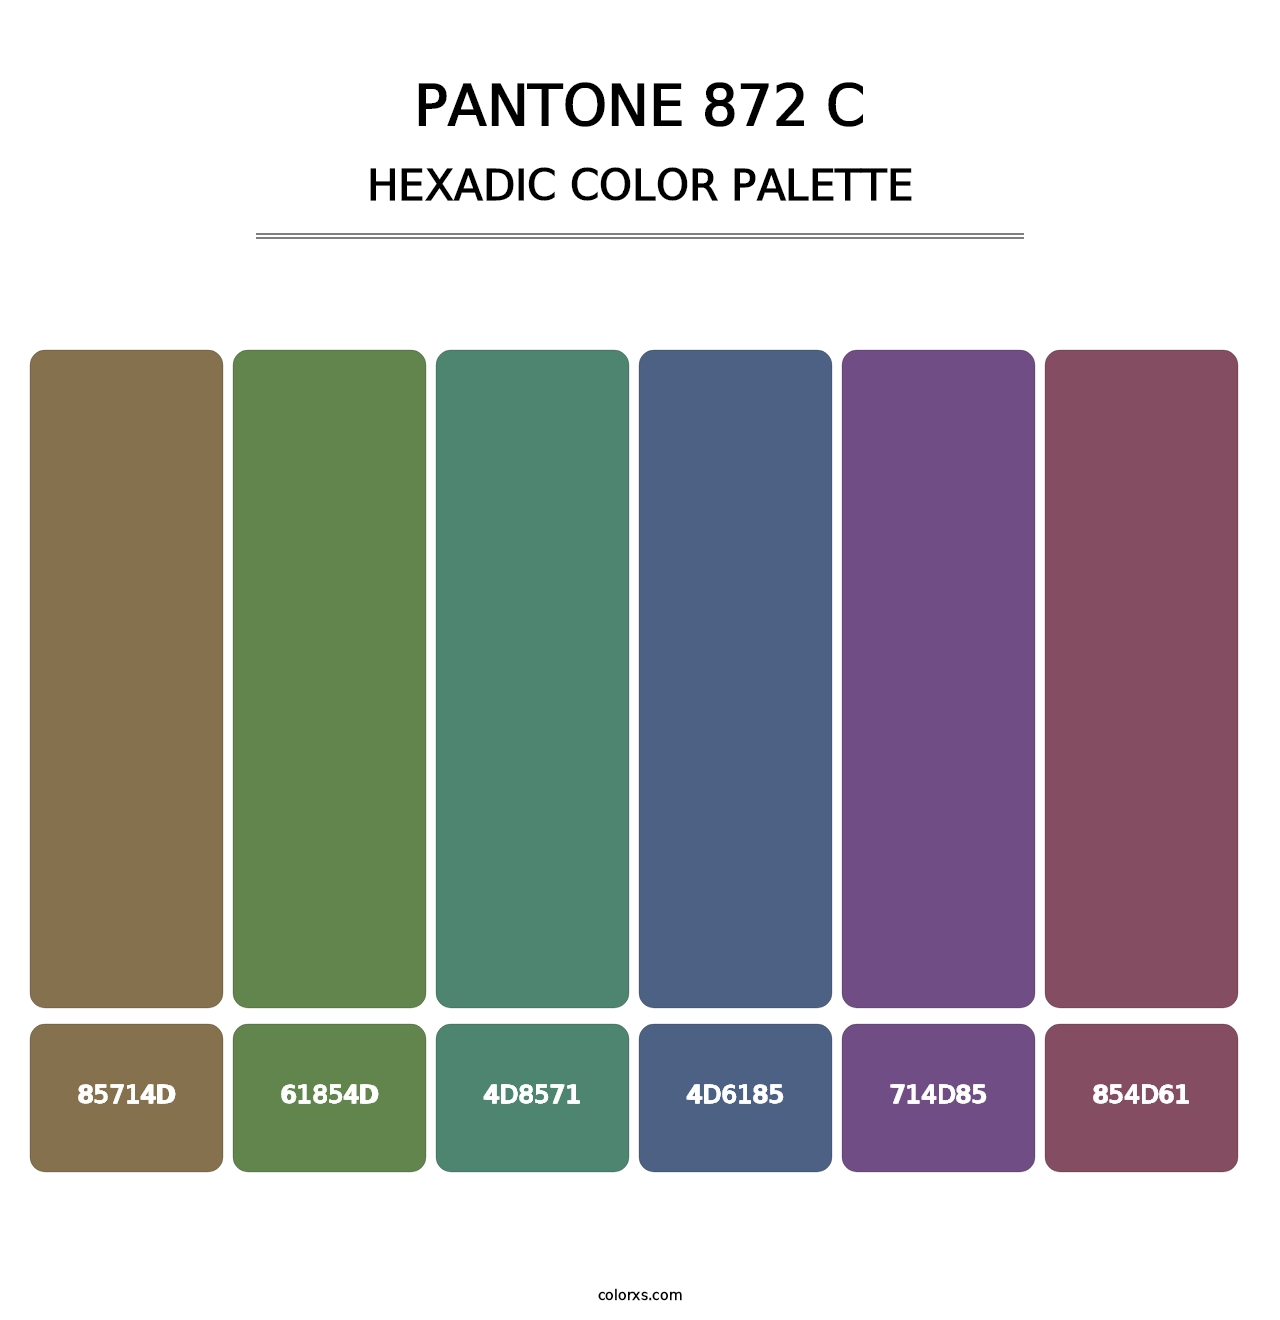 PANTONE 872 C - Hexadic Color Palette